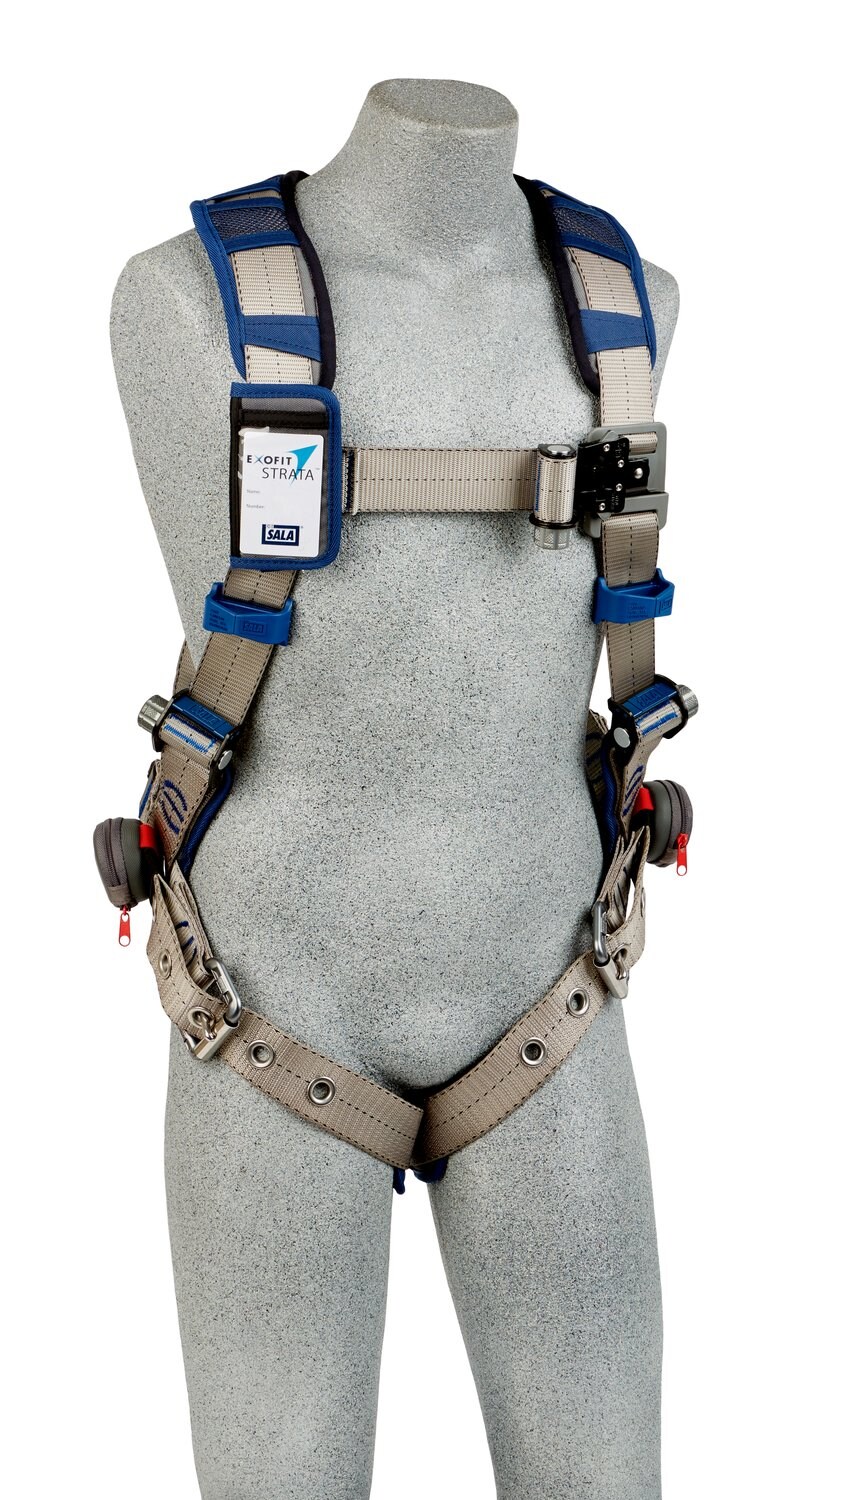 7012815976 - 3M DBI-SALA ExoFit STRATA Comfort Vest Safety Harness 1112517, Large